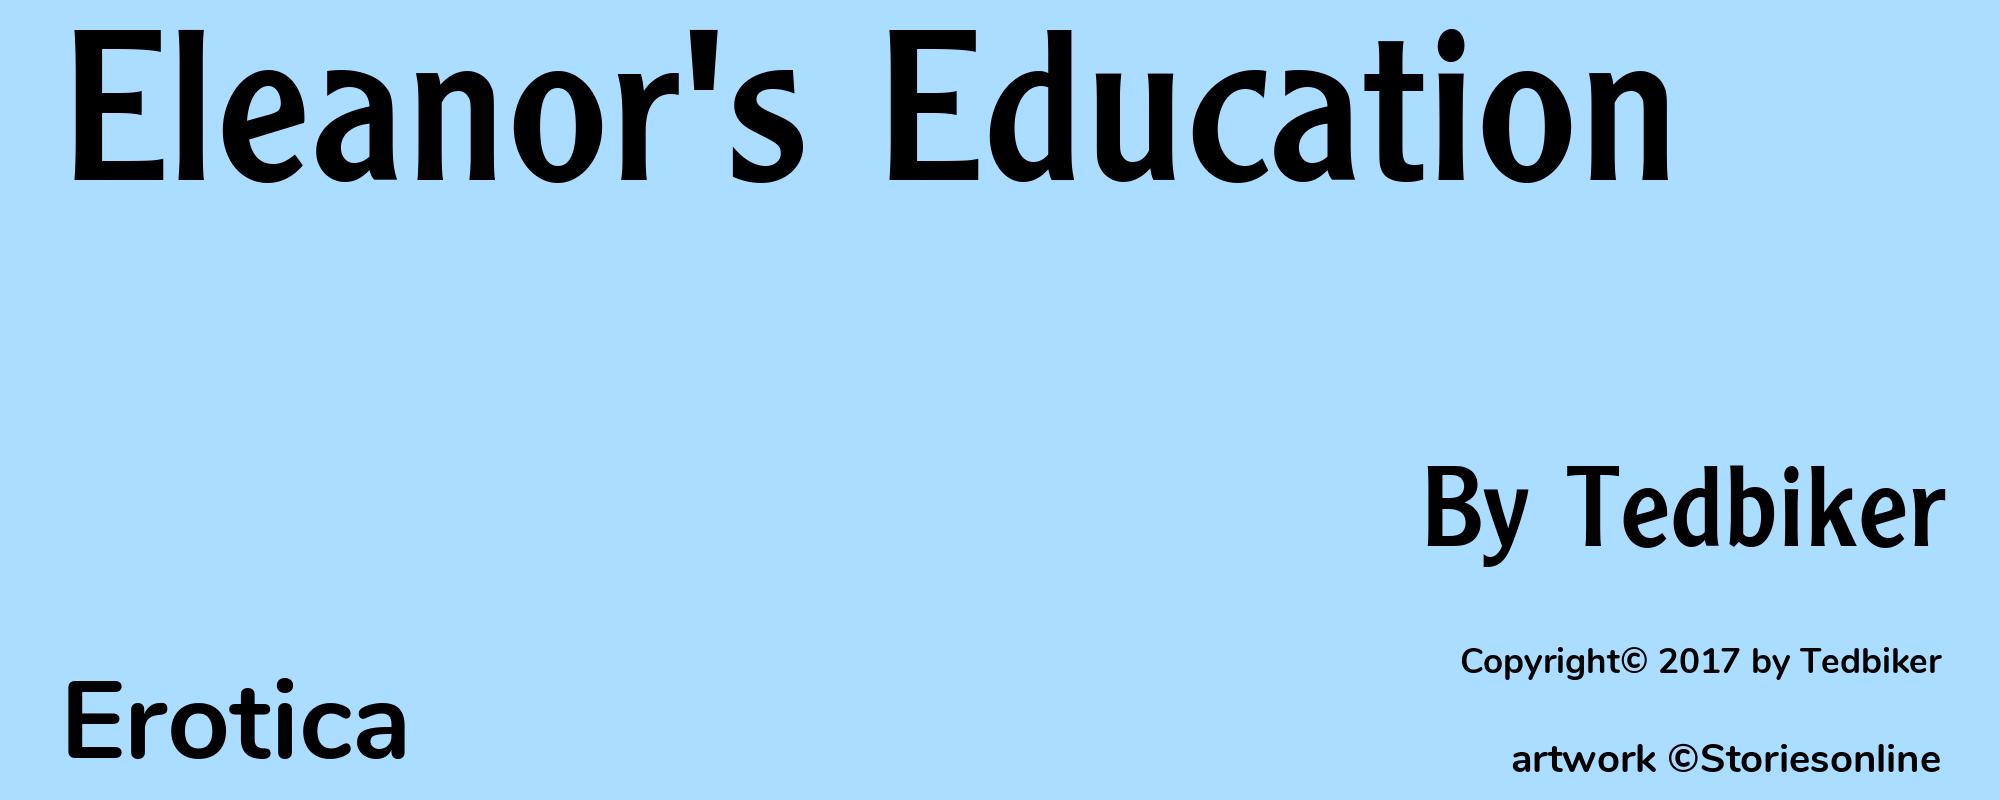 Eleanor's Education - Cover